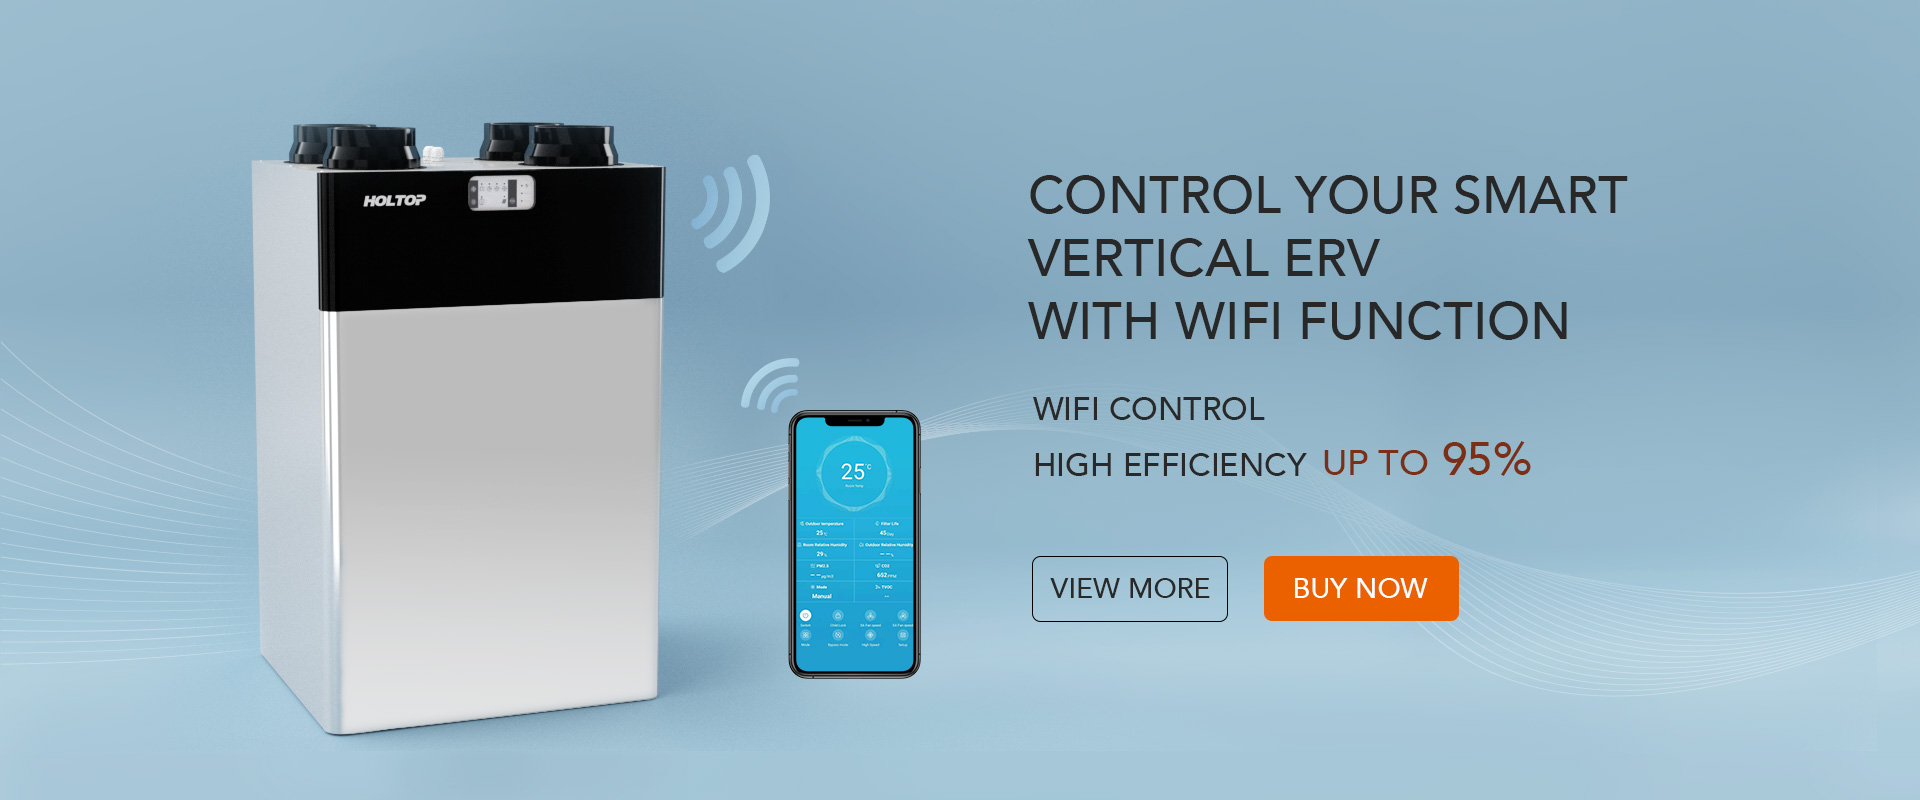 Holtop модернизировал Smart Vertical HRV с функцией Wi-Fi